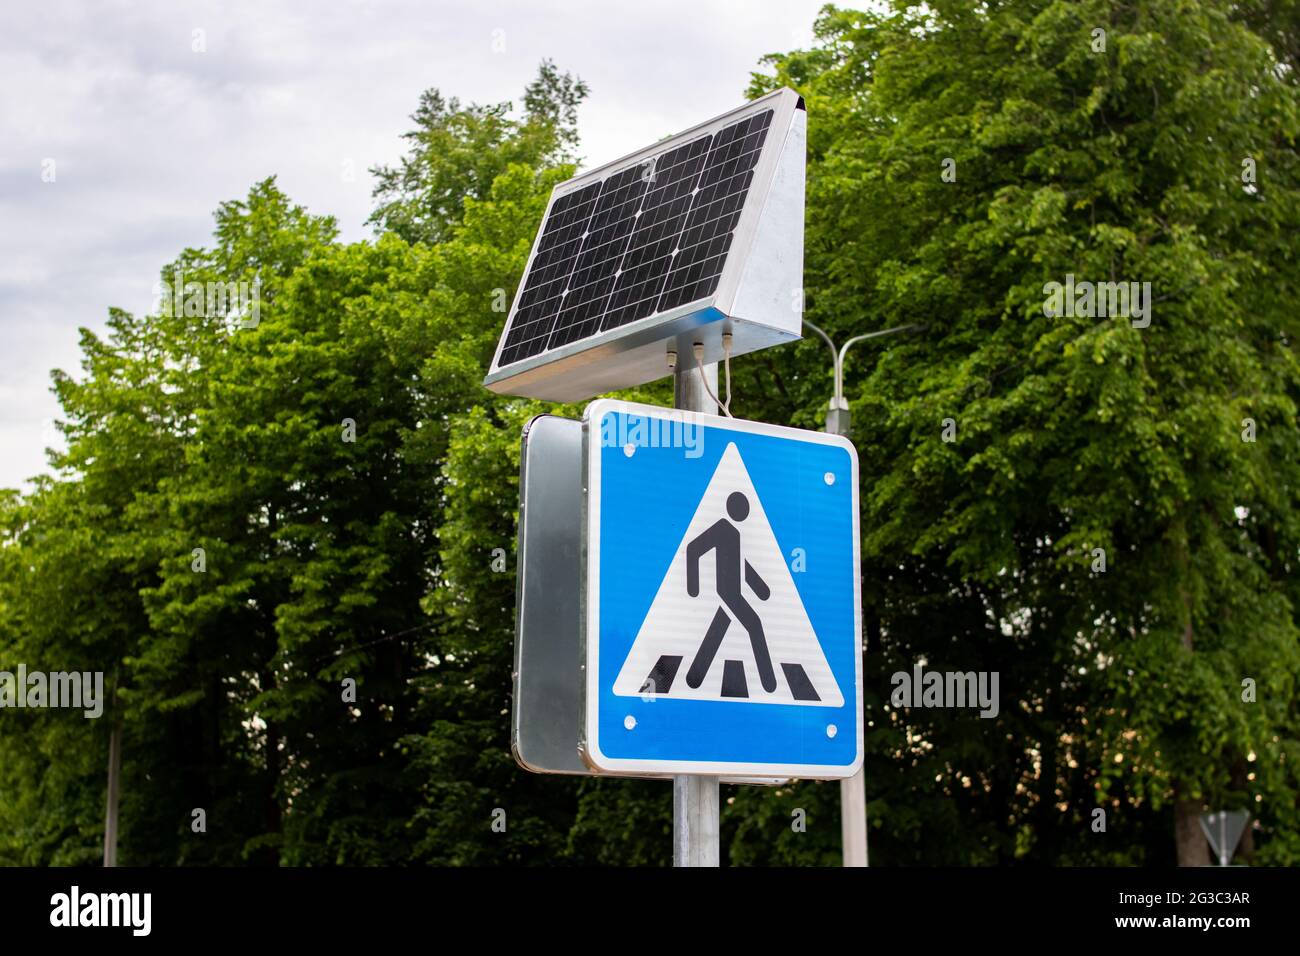 Economy Solar Powered Flashing LED PEDESTRIAN CROSSING Sign